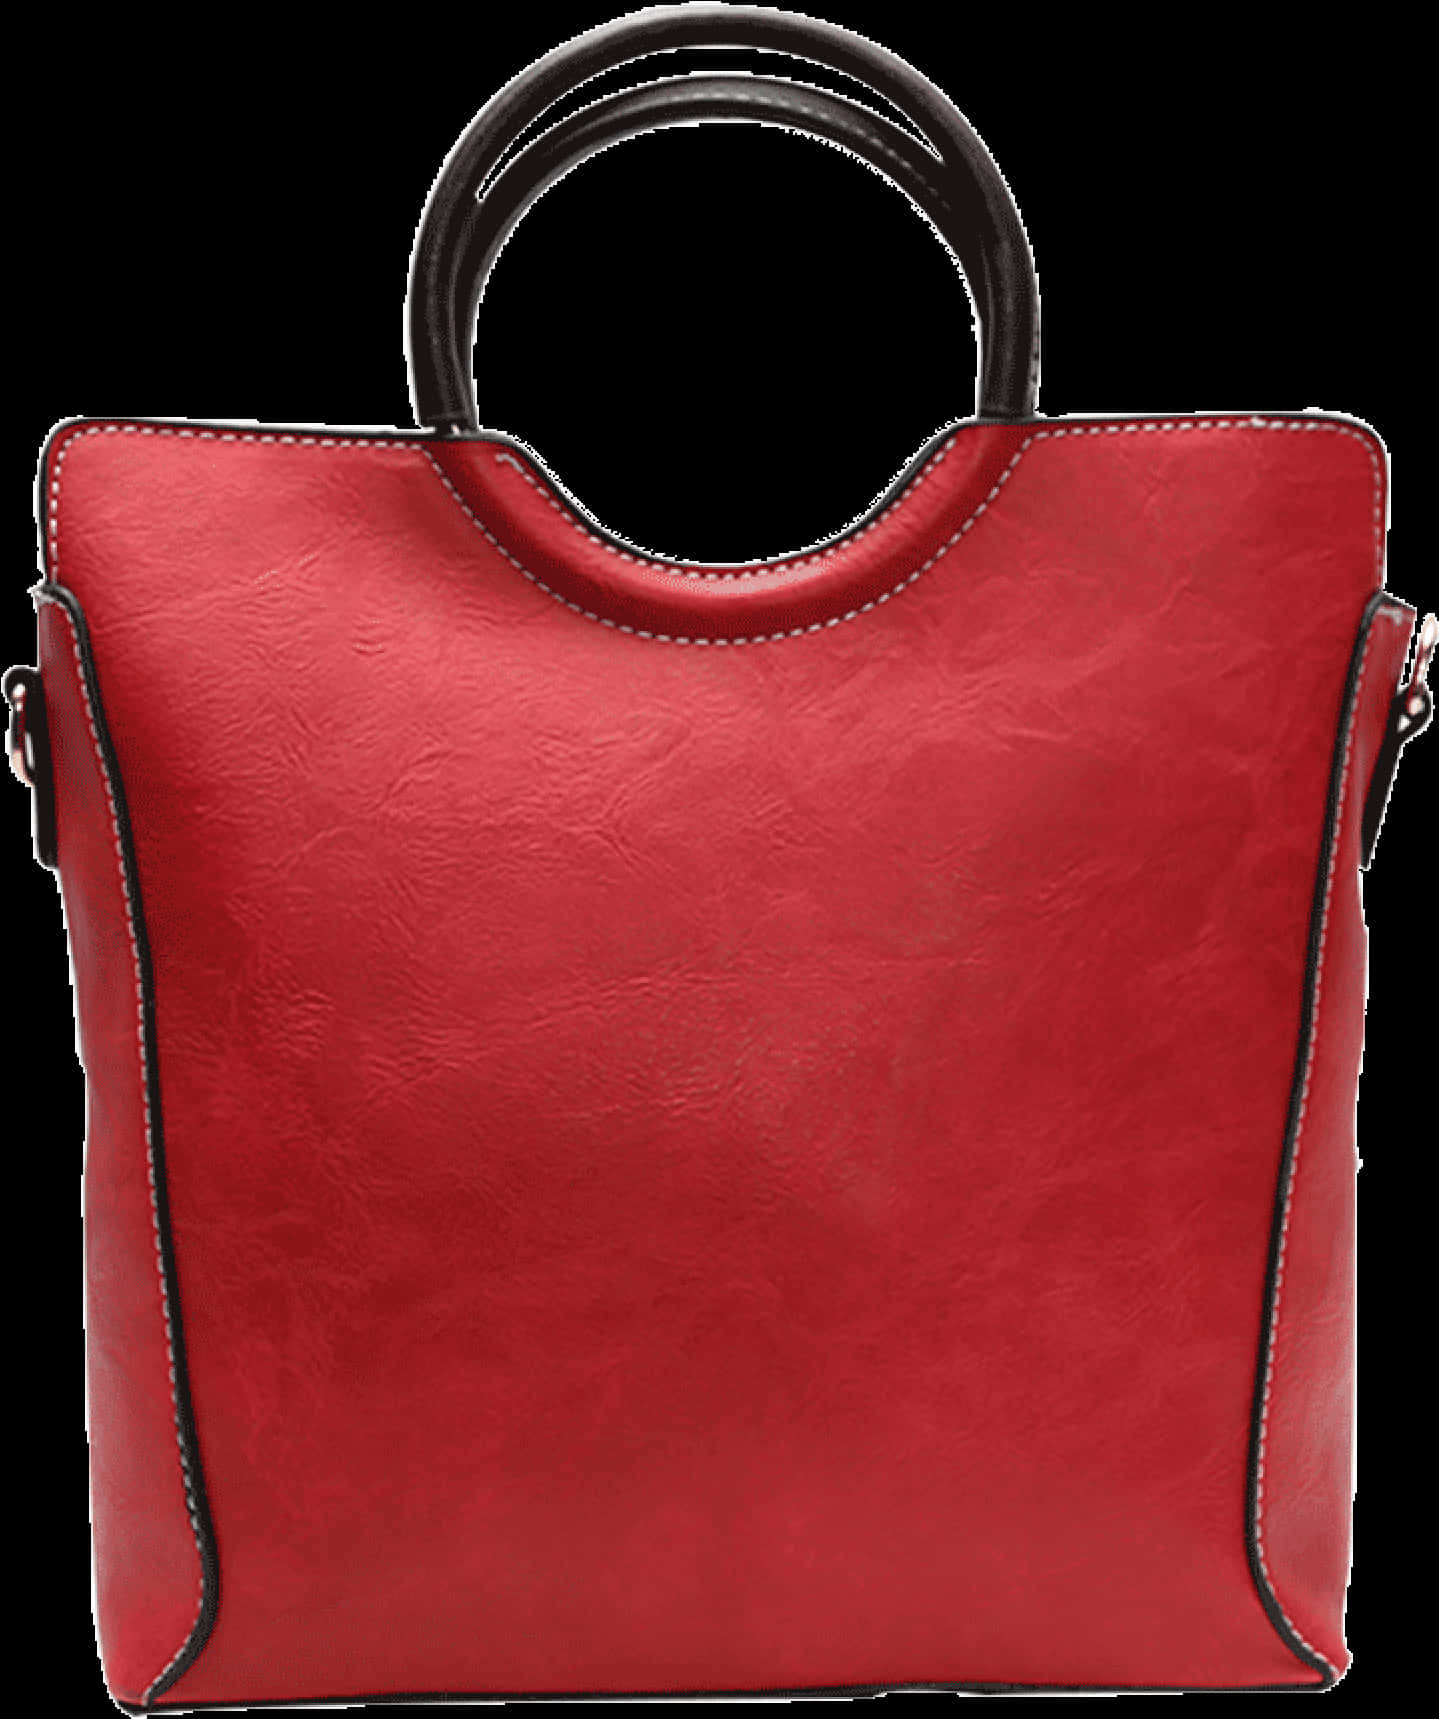 Elegant Red Leather Tote Bag PNG